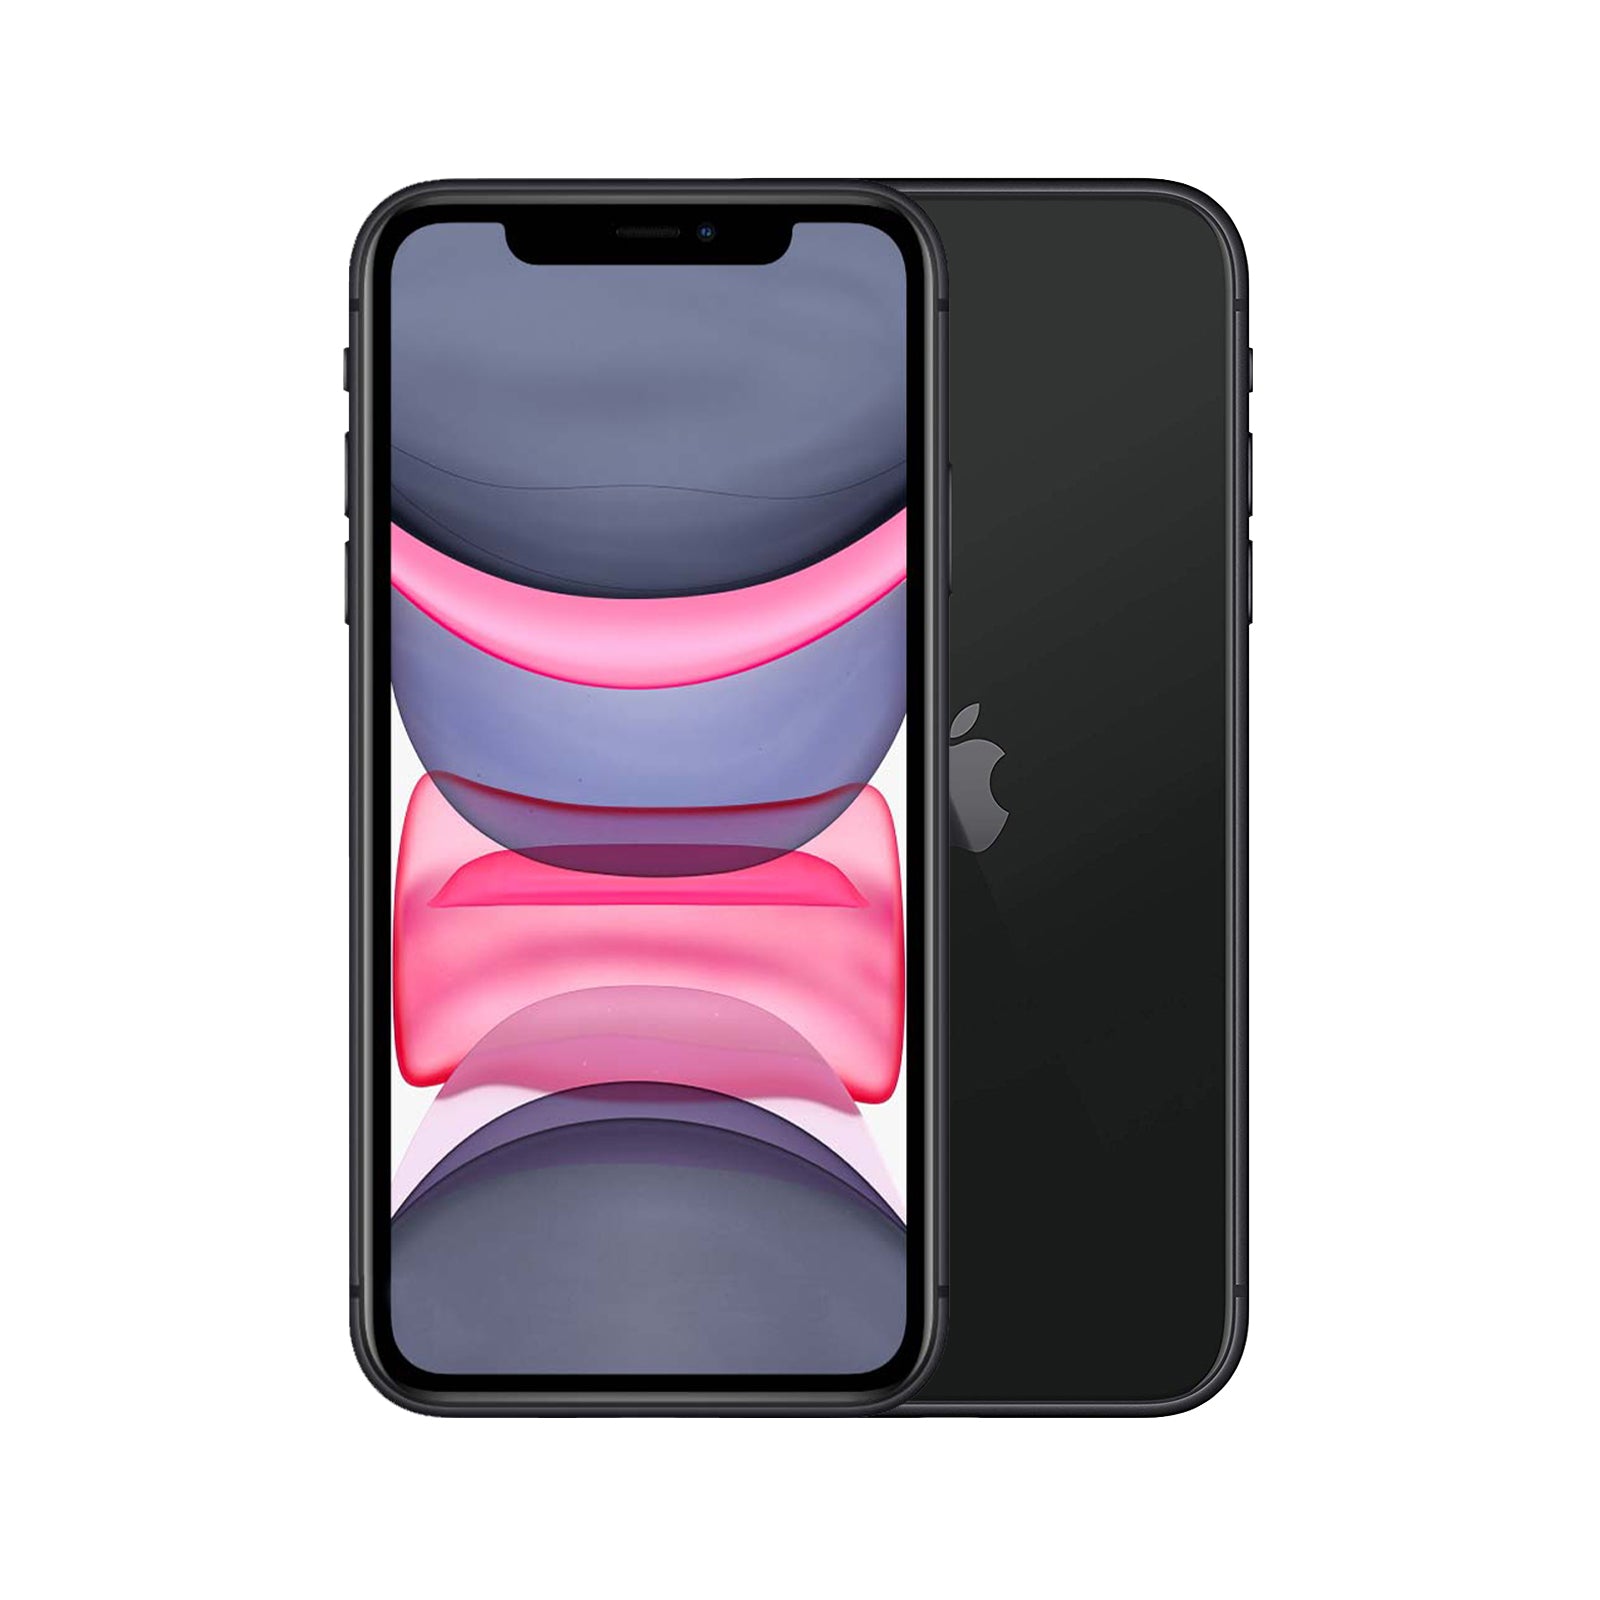 Apple iPhone 11 64GB Black - As New - Refurbished